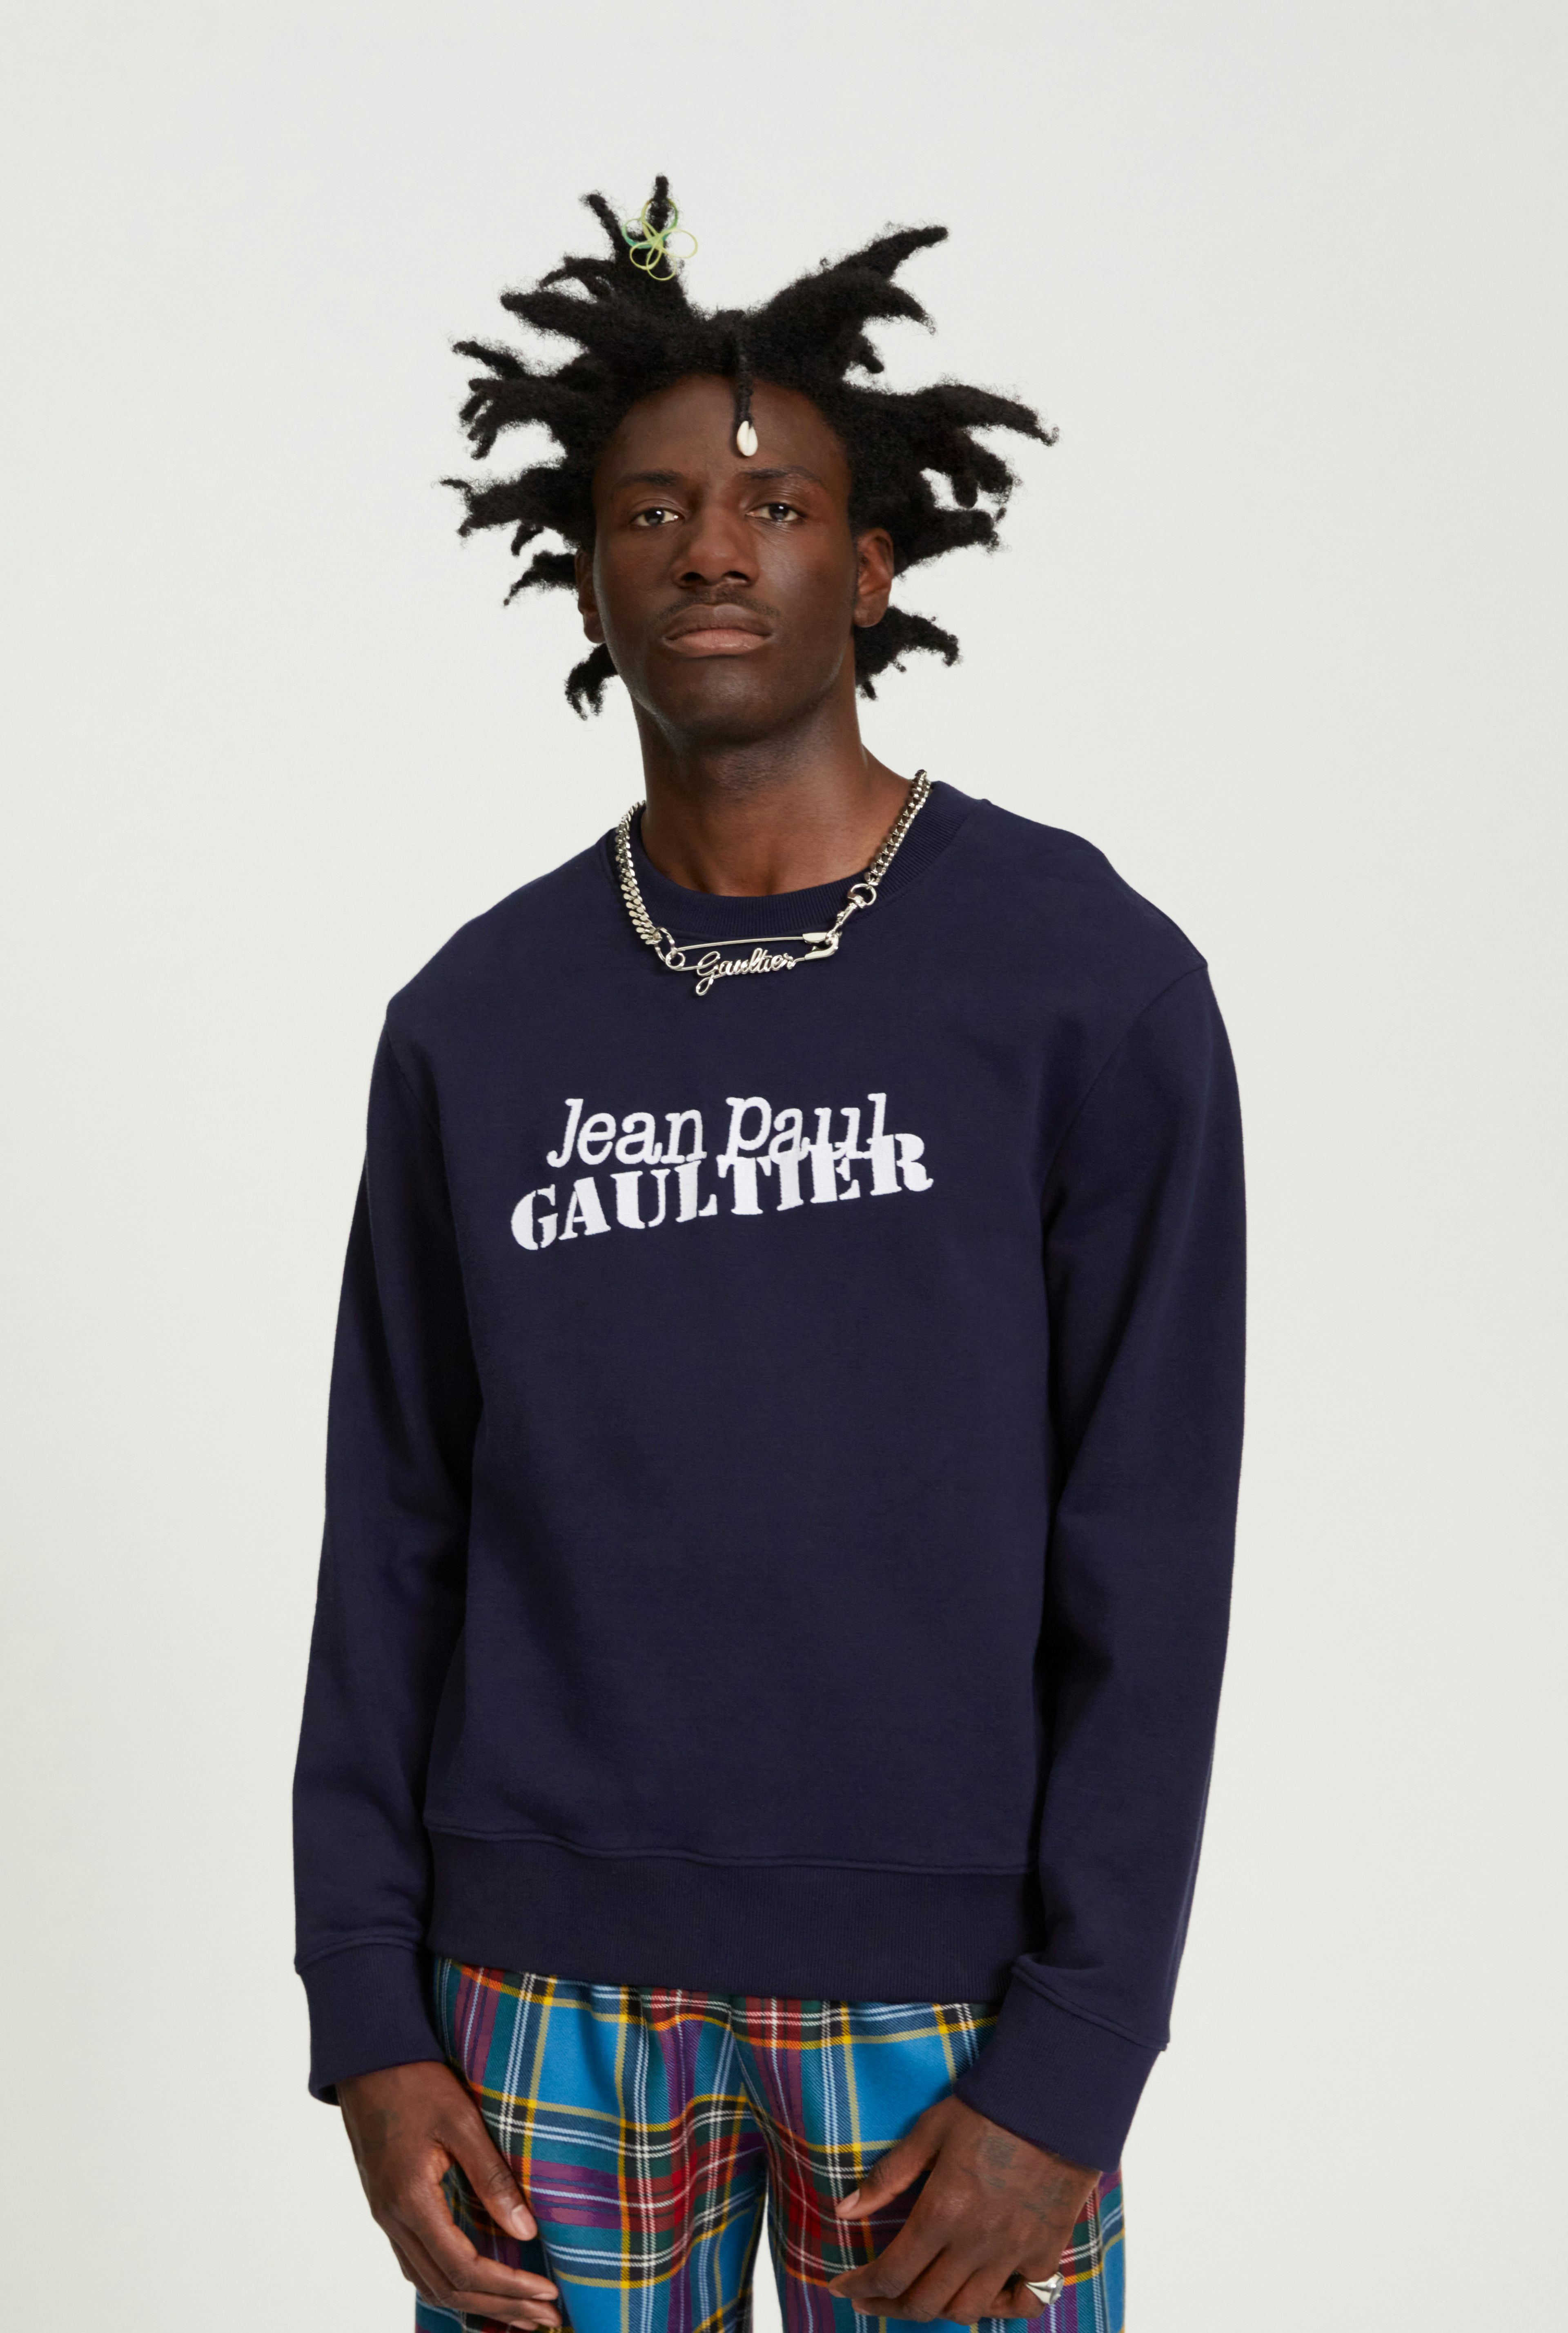 The Jean Paul Gaultier sweatshirt